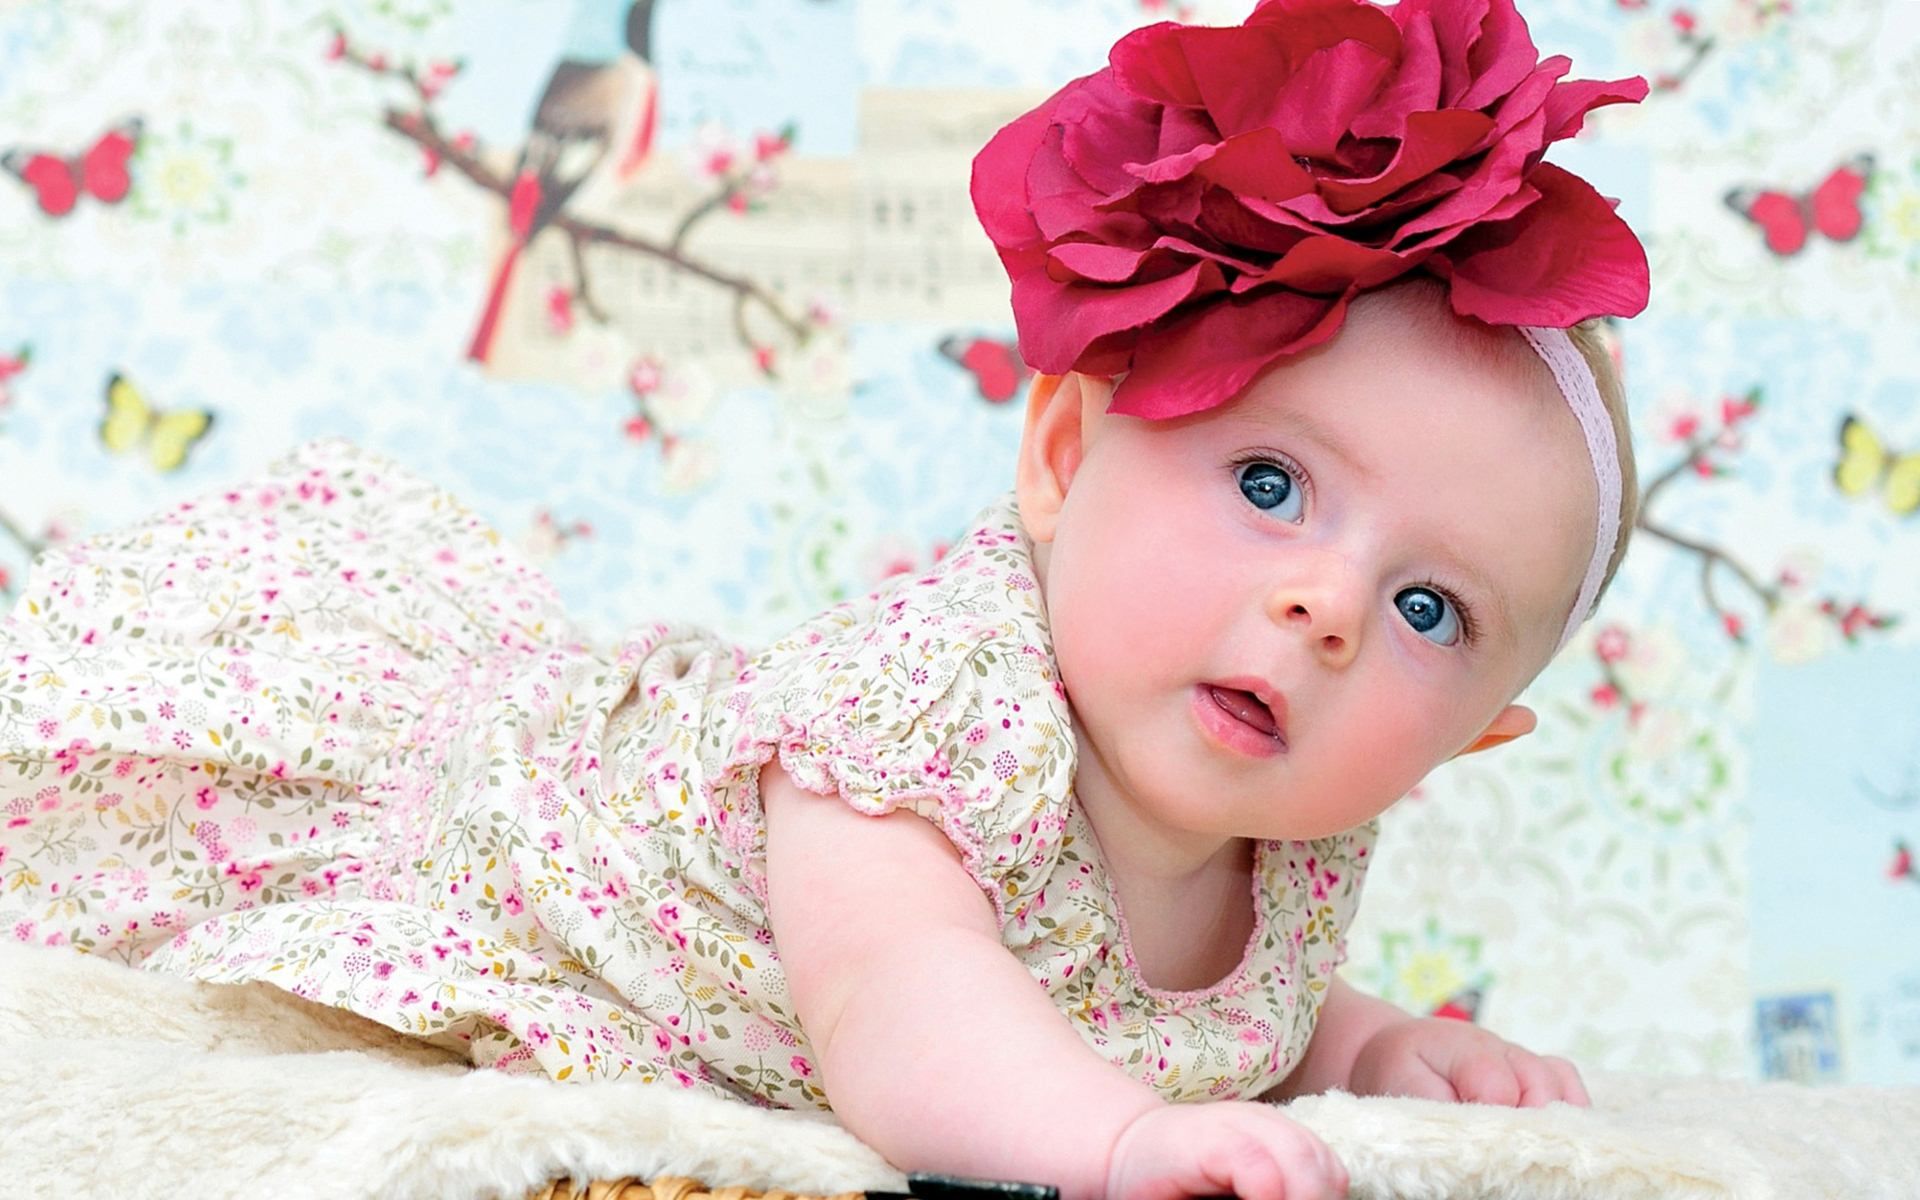 Baby Girls Hd Wallpapers Free HD Desktop Wallpapers - Widescreen